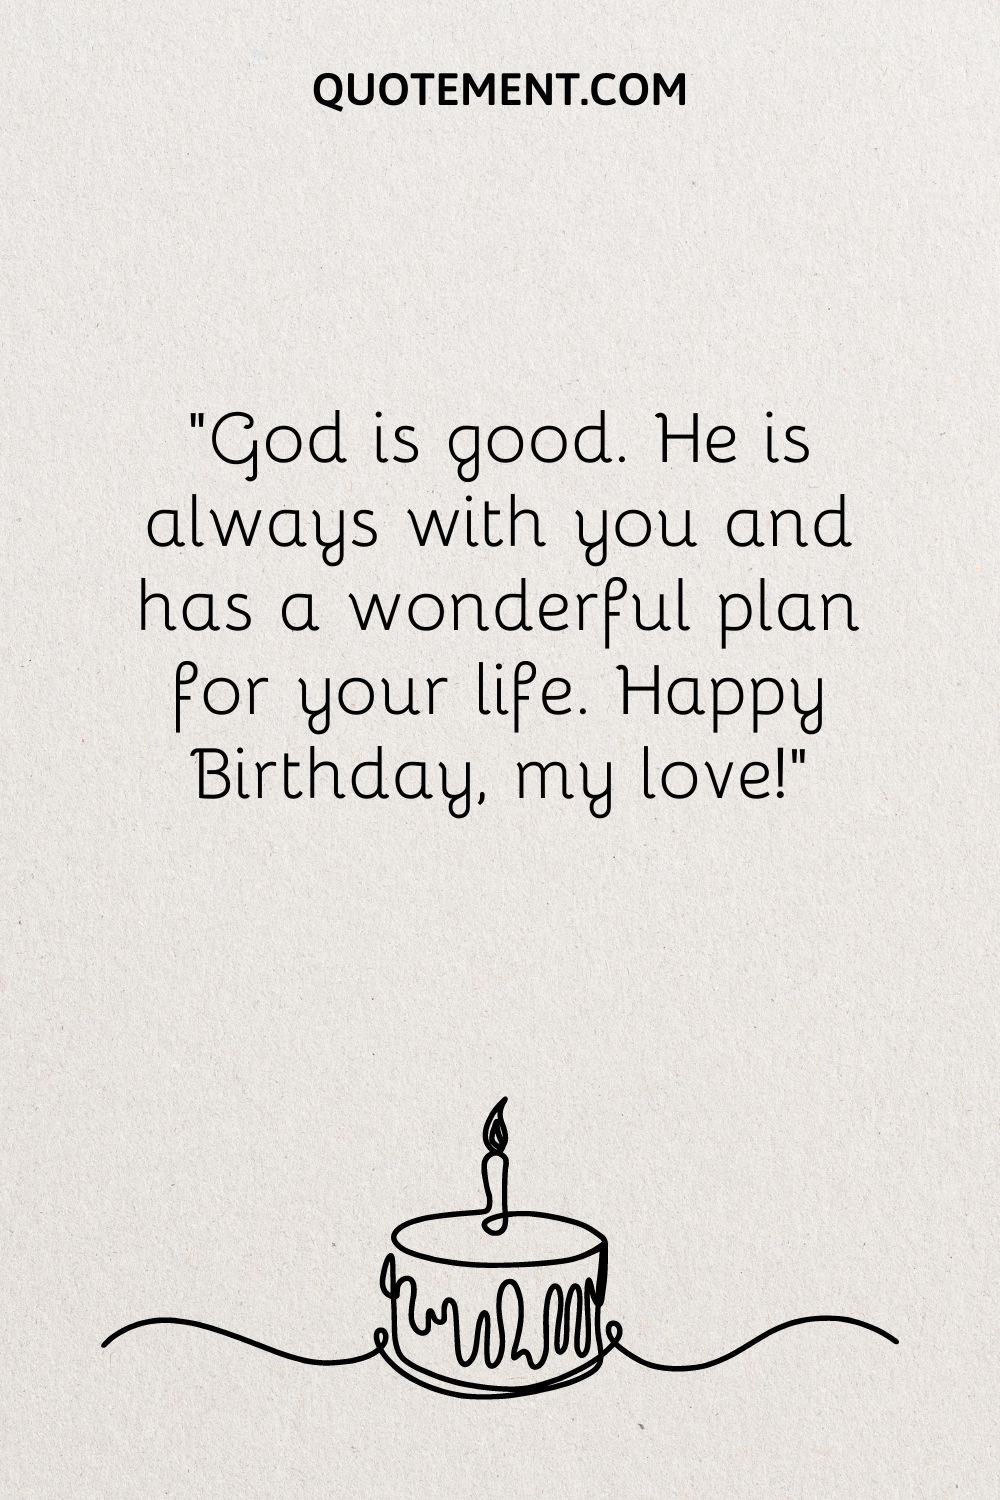 birthday cake illustration representing spiritual birthday wish for my husband